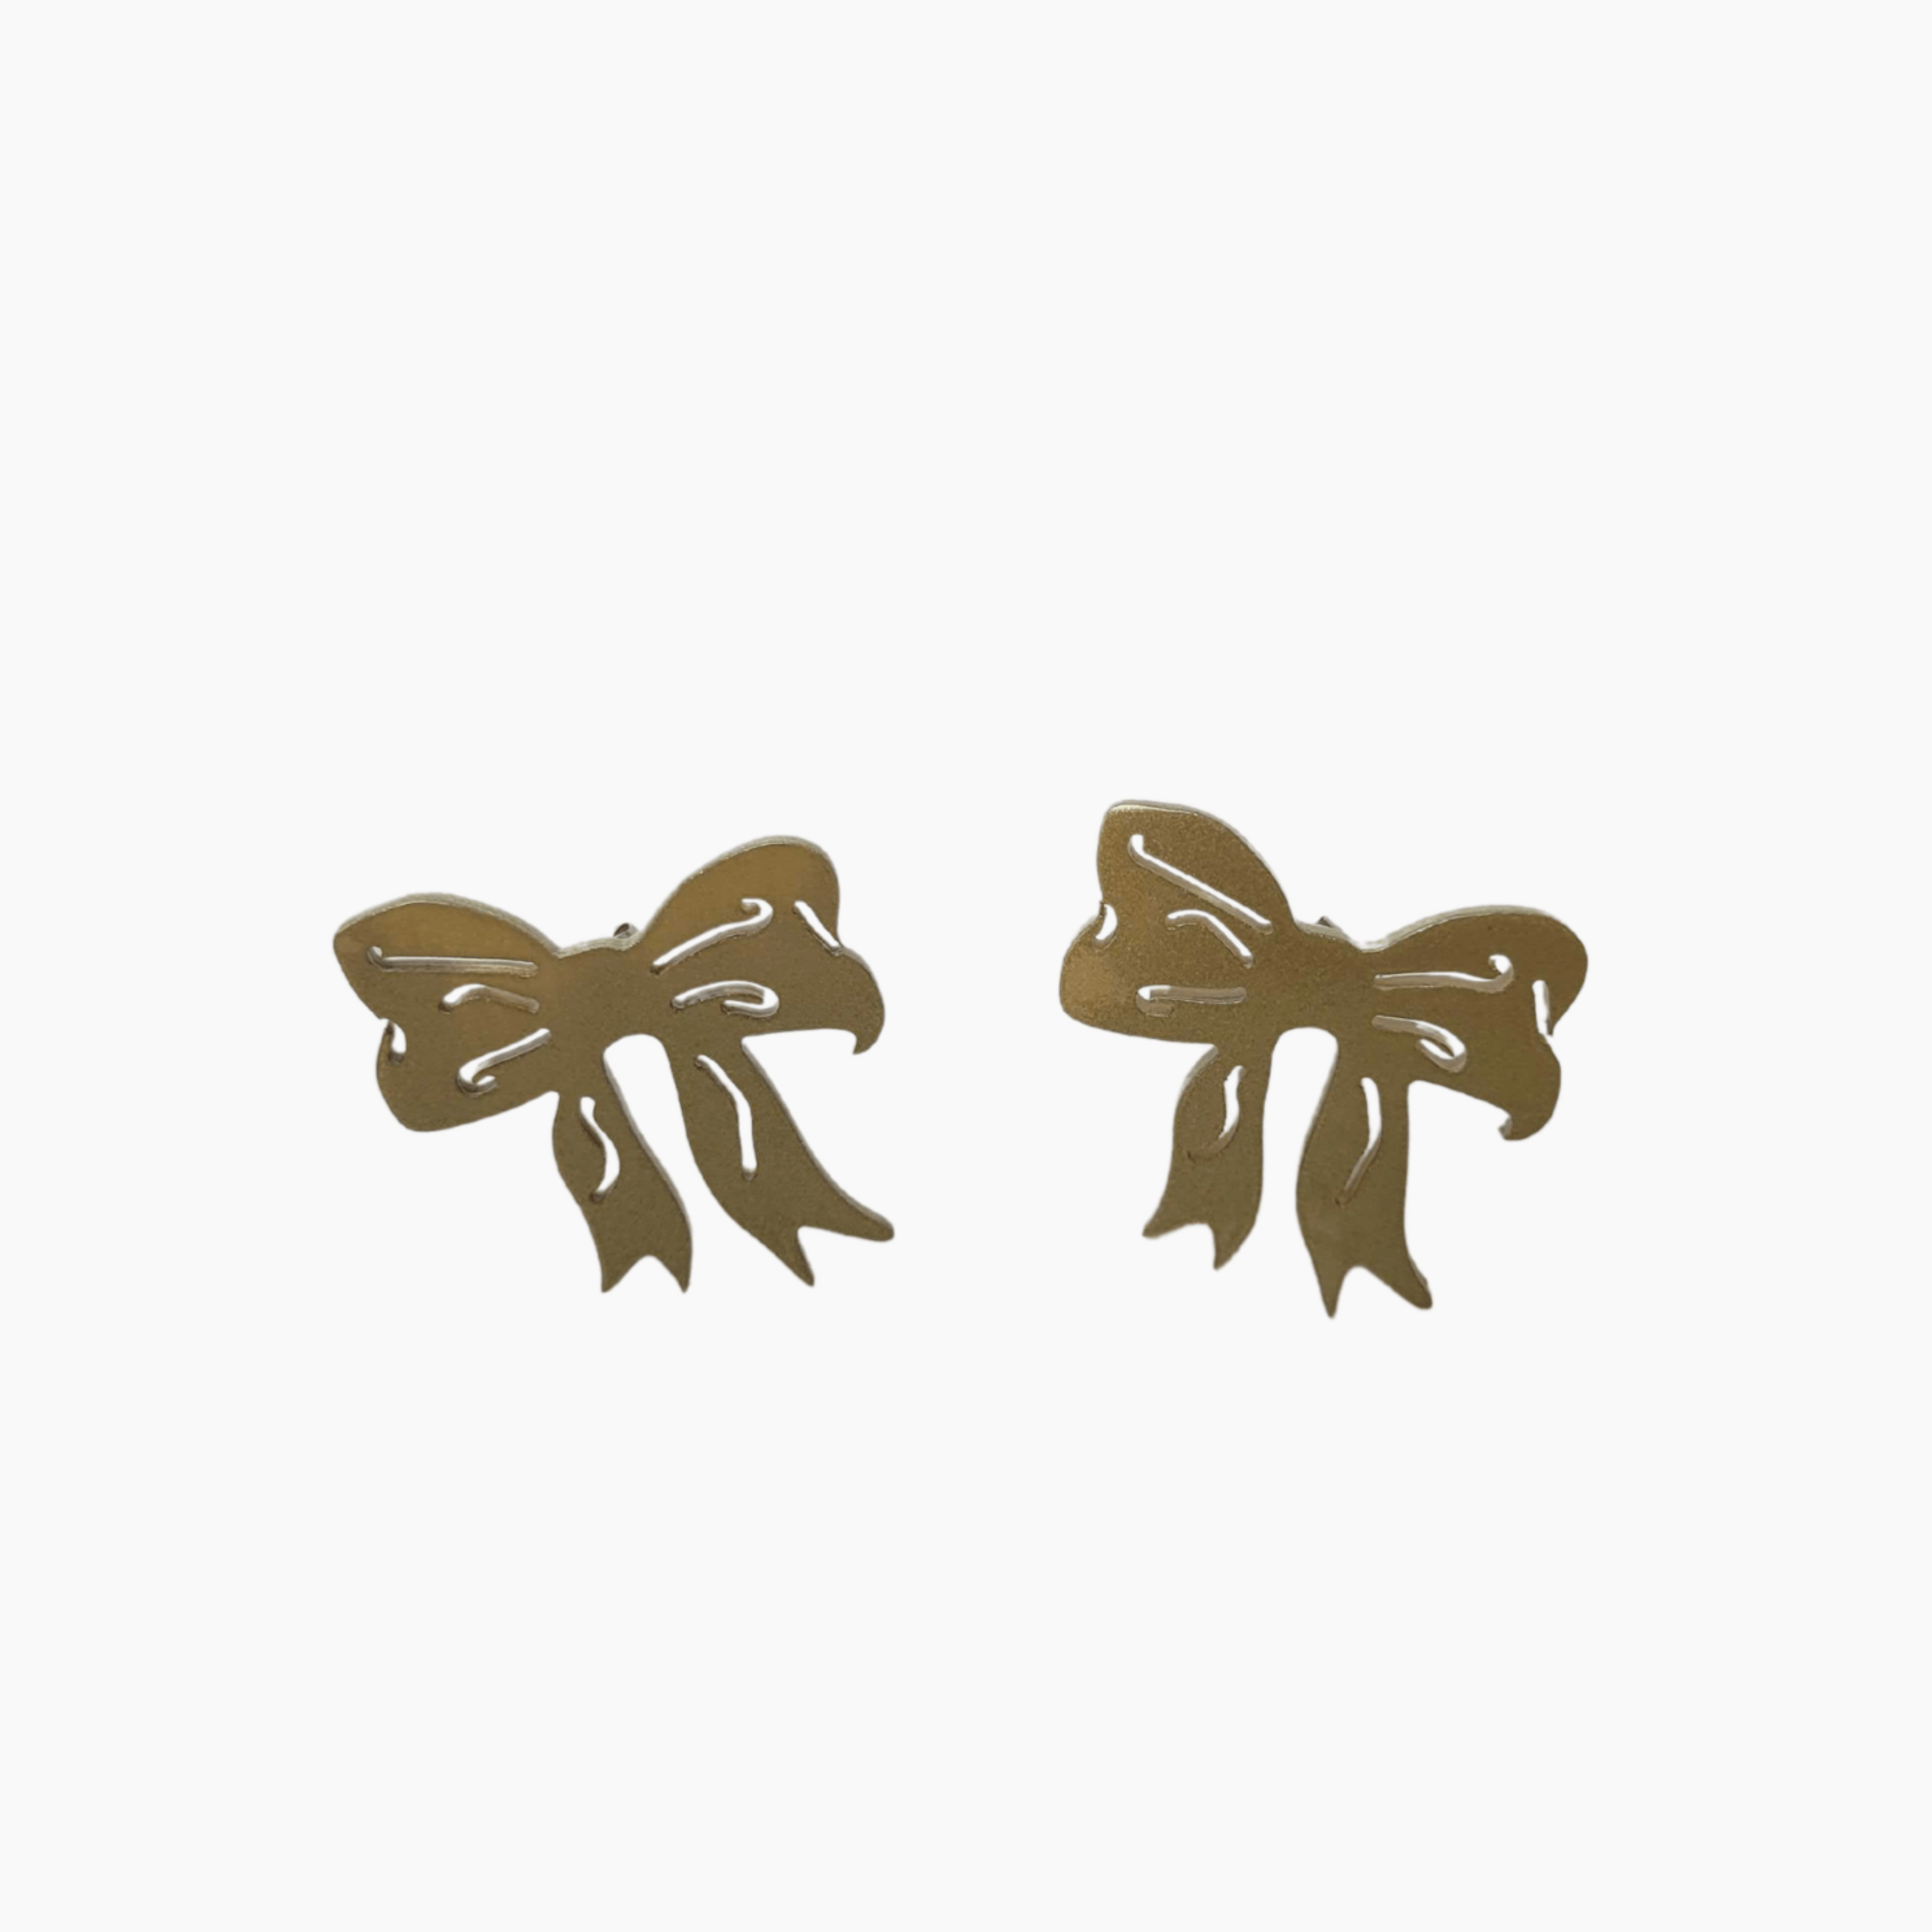 Big Gold Bow Earrings